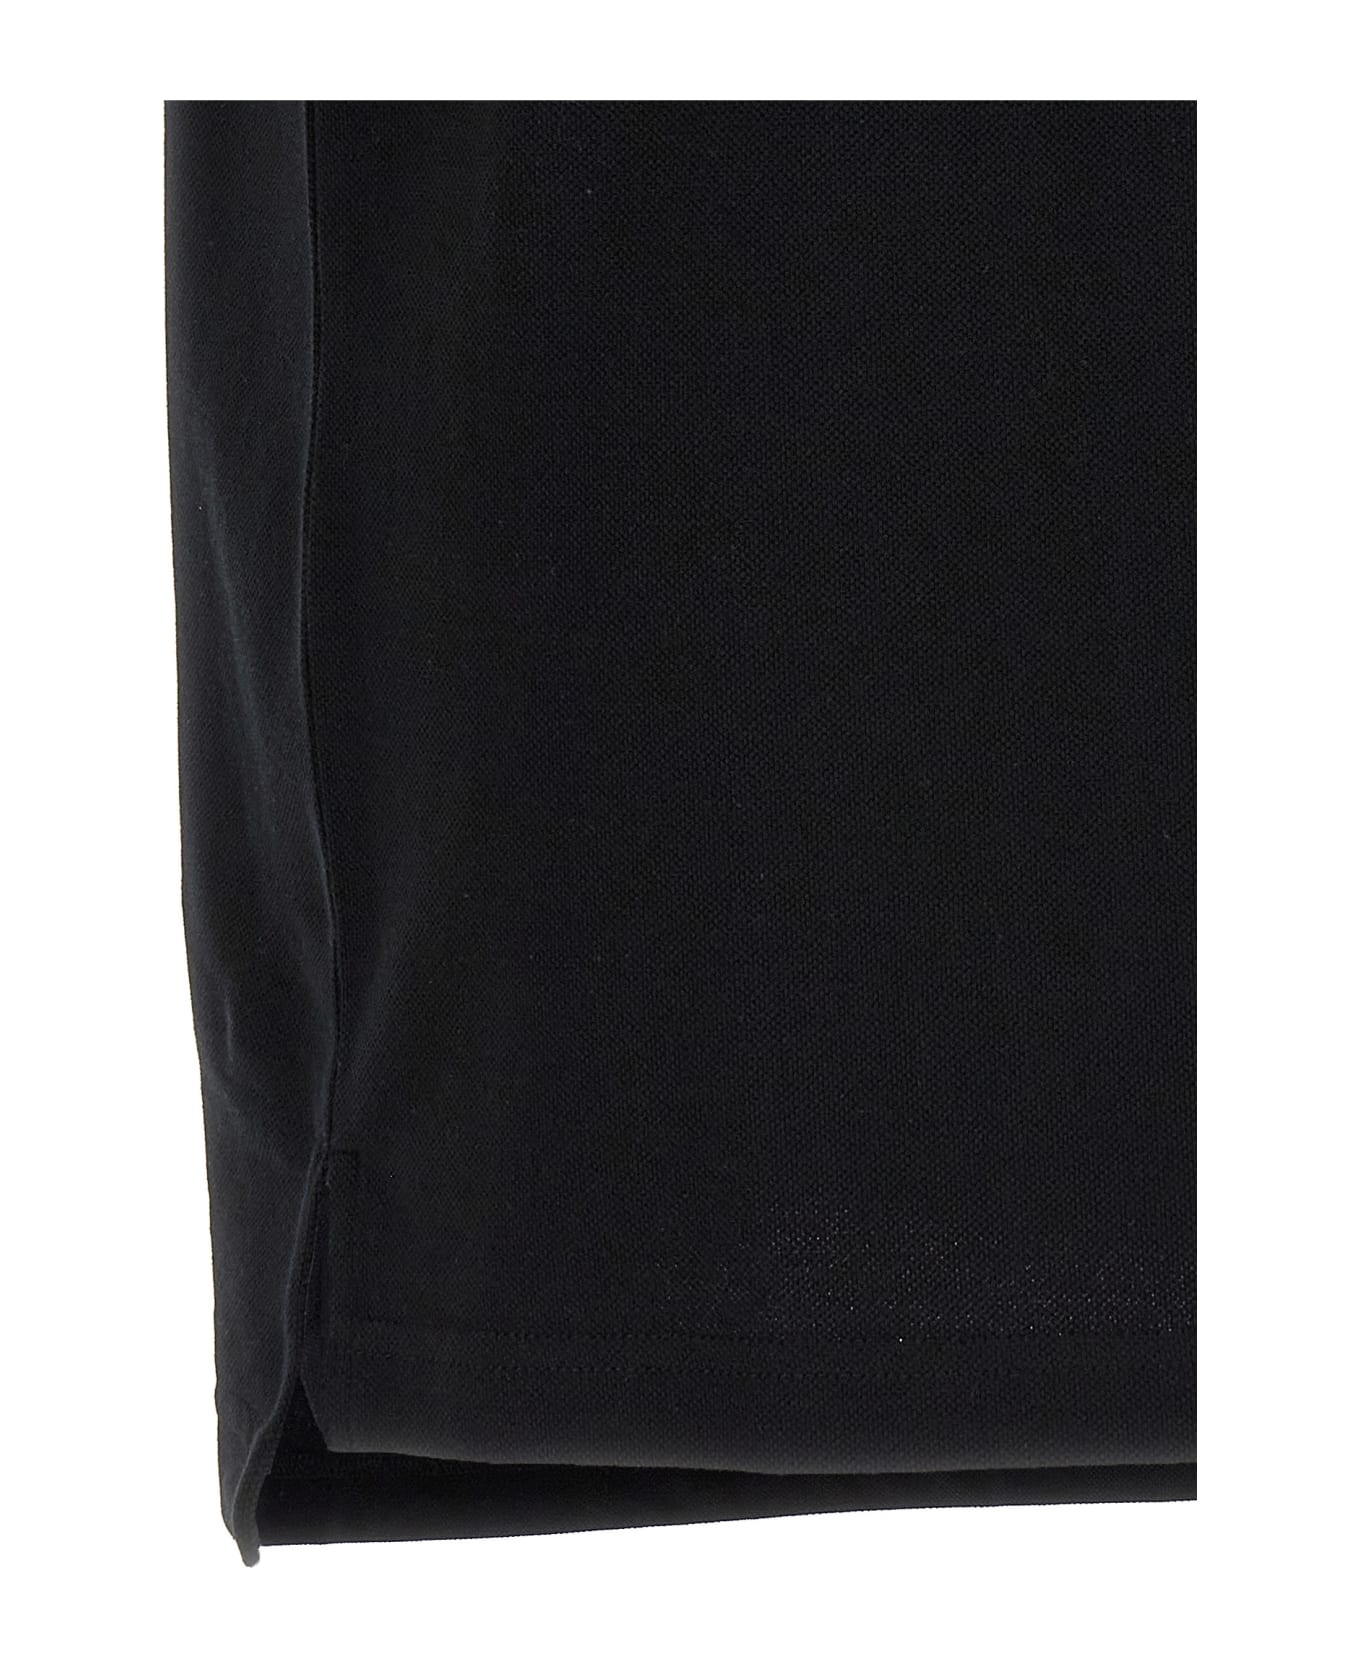 Moschino 'teddy' Polo Shirt - Black  